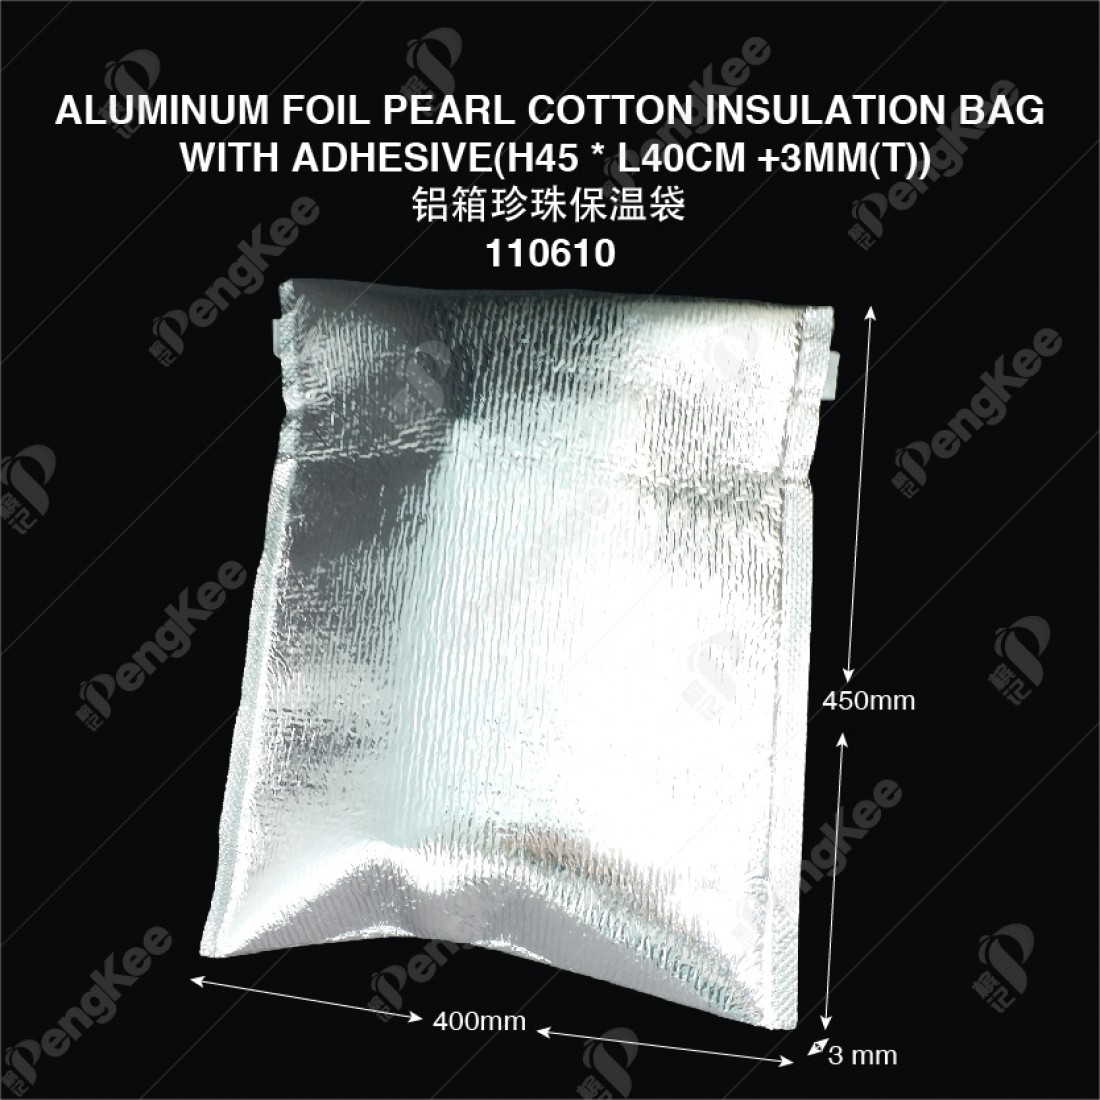 ALUMINUM FOIL PEARL COTTON INSULATION BAG WITH ADHESIVE(H45CM * L40CM +3MM(T)) 铝箱珍珠保温袋 (50'S)